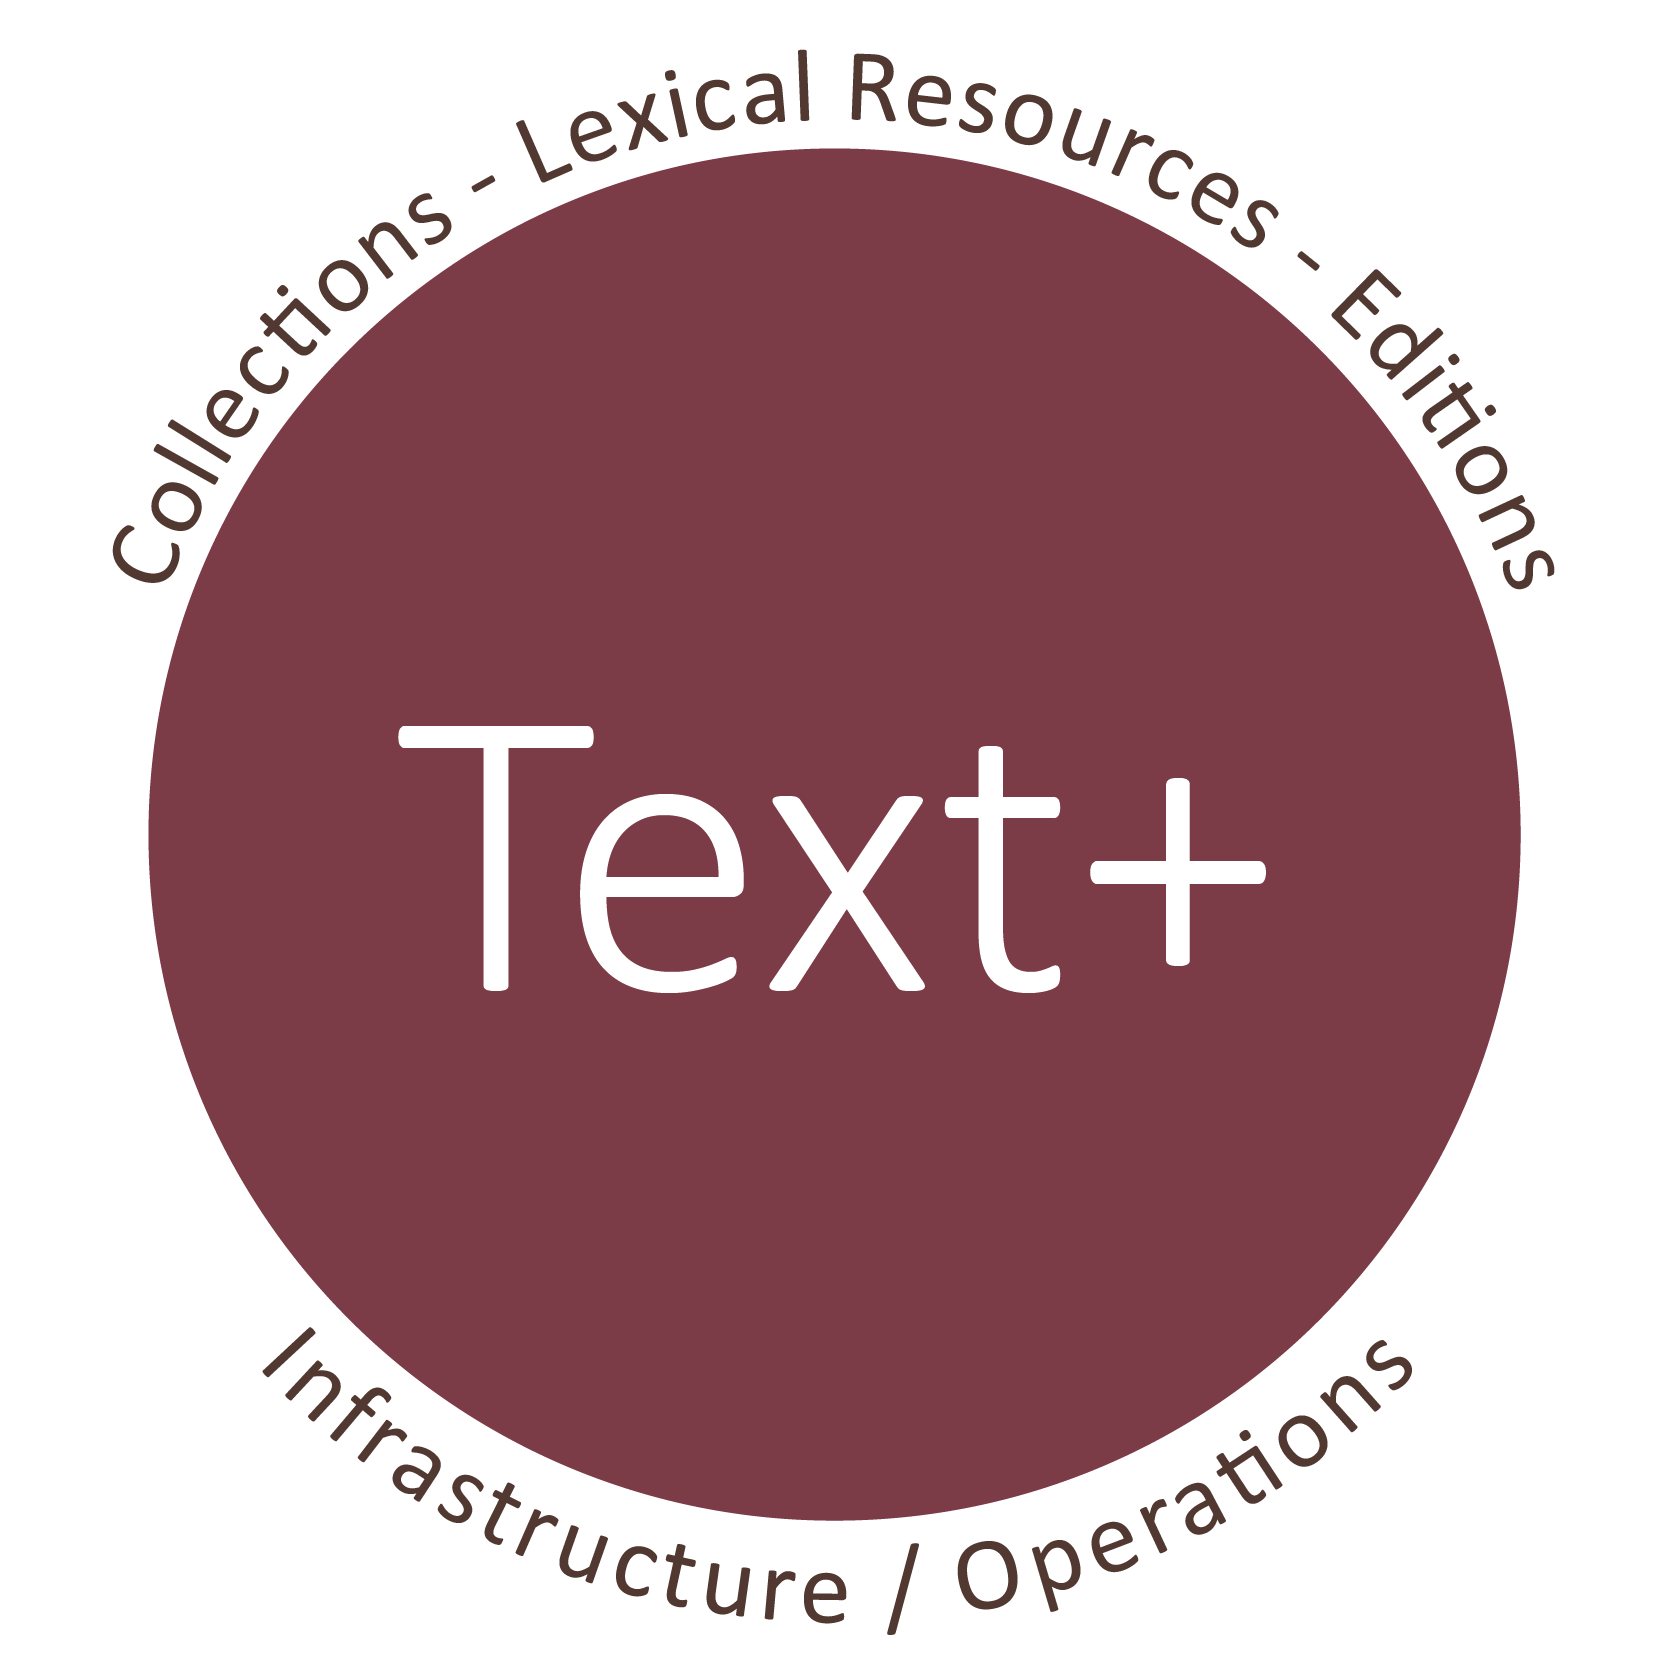 Text+ Logo